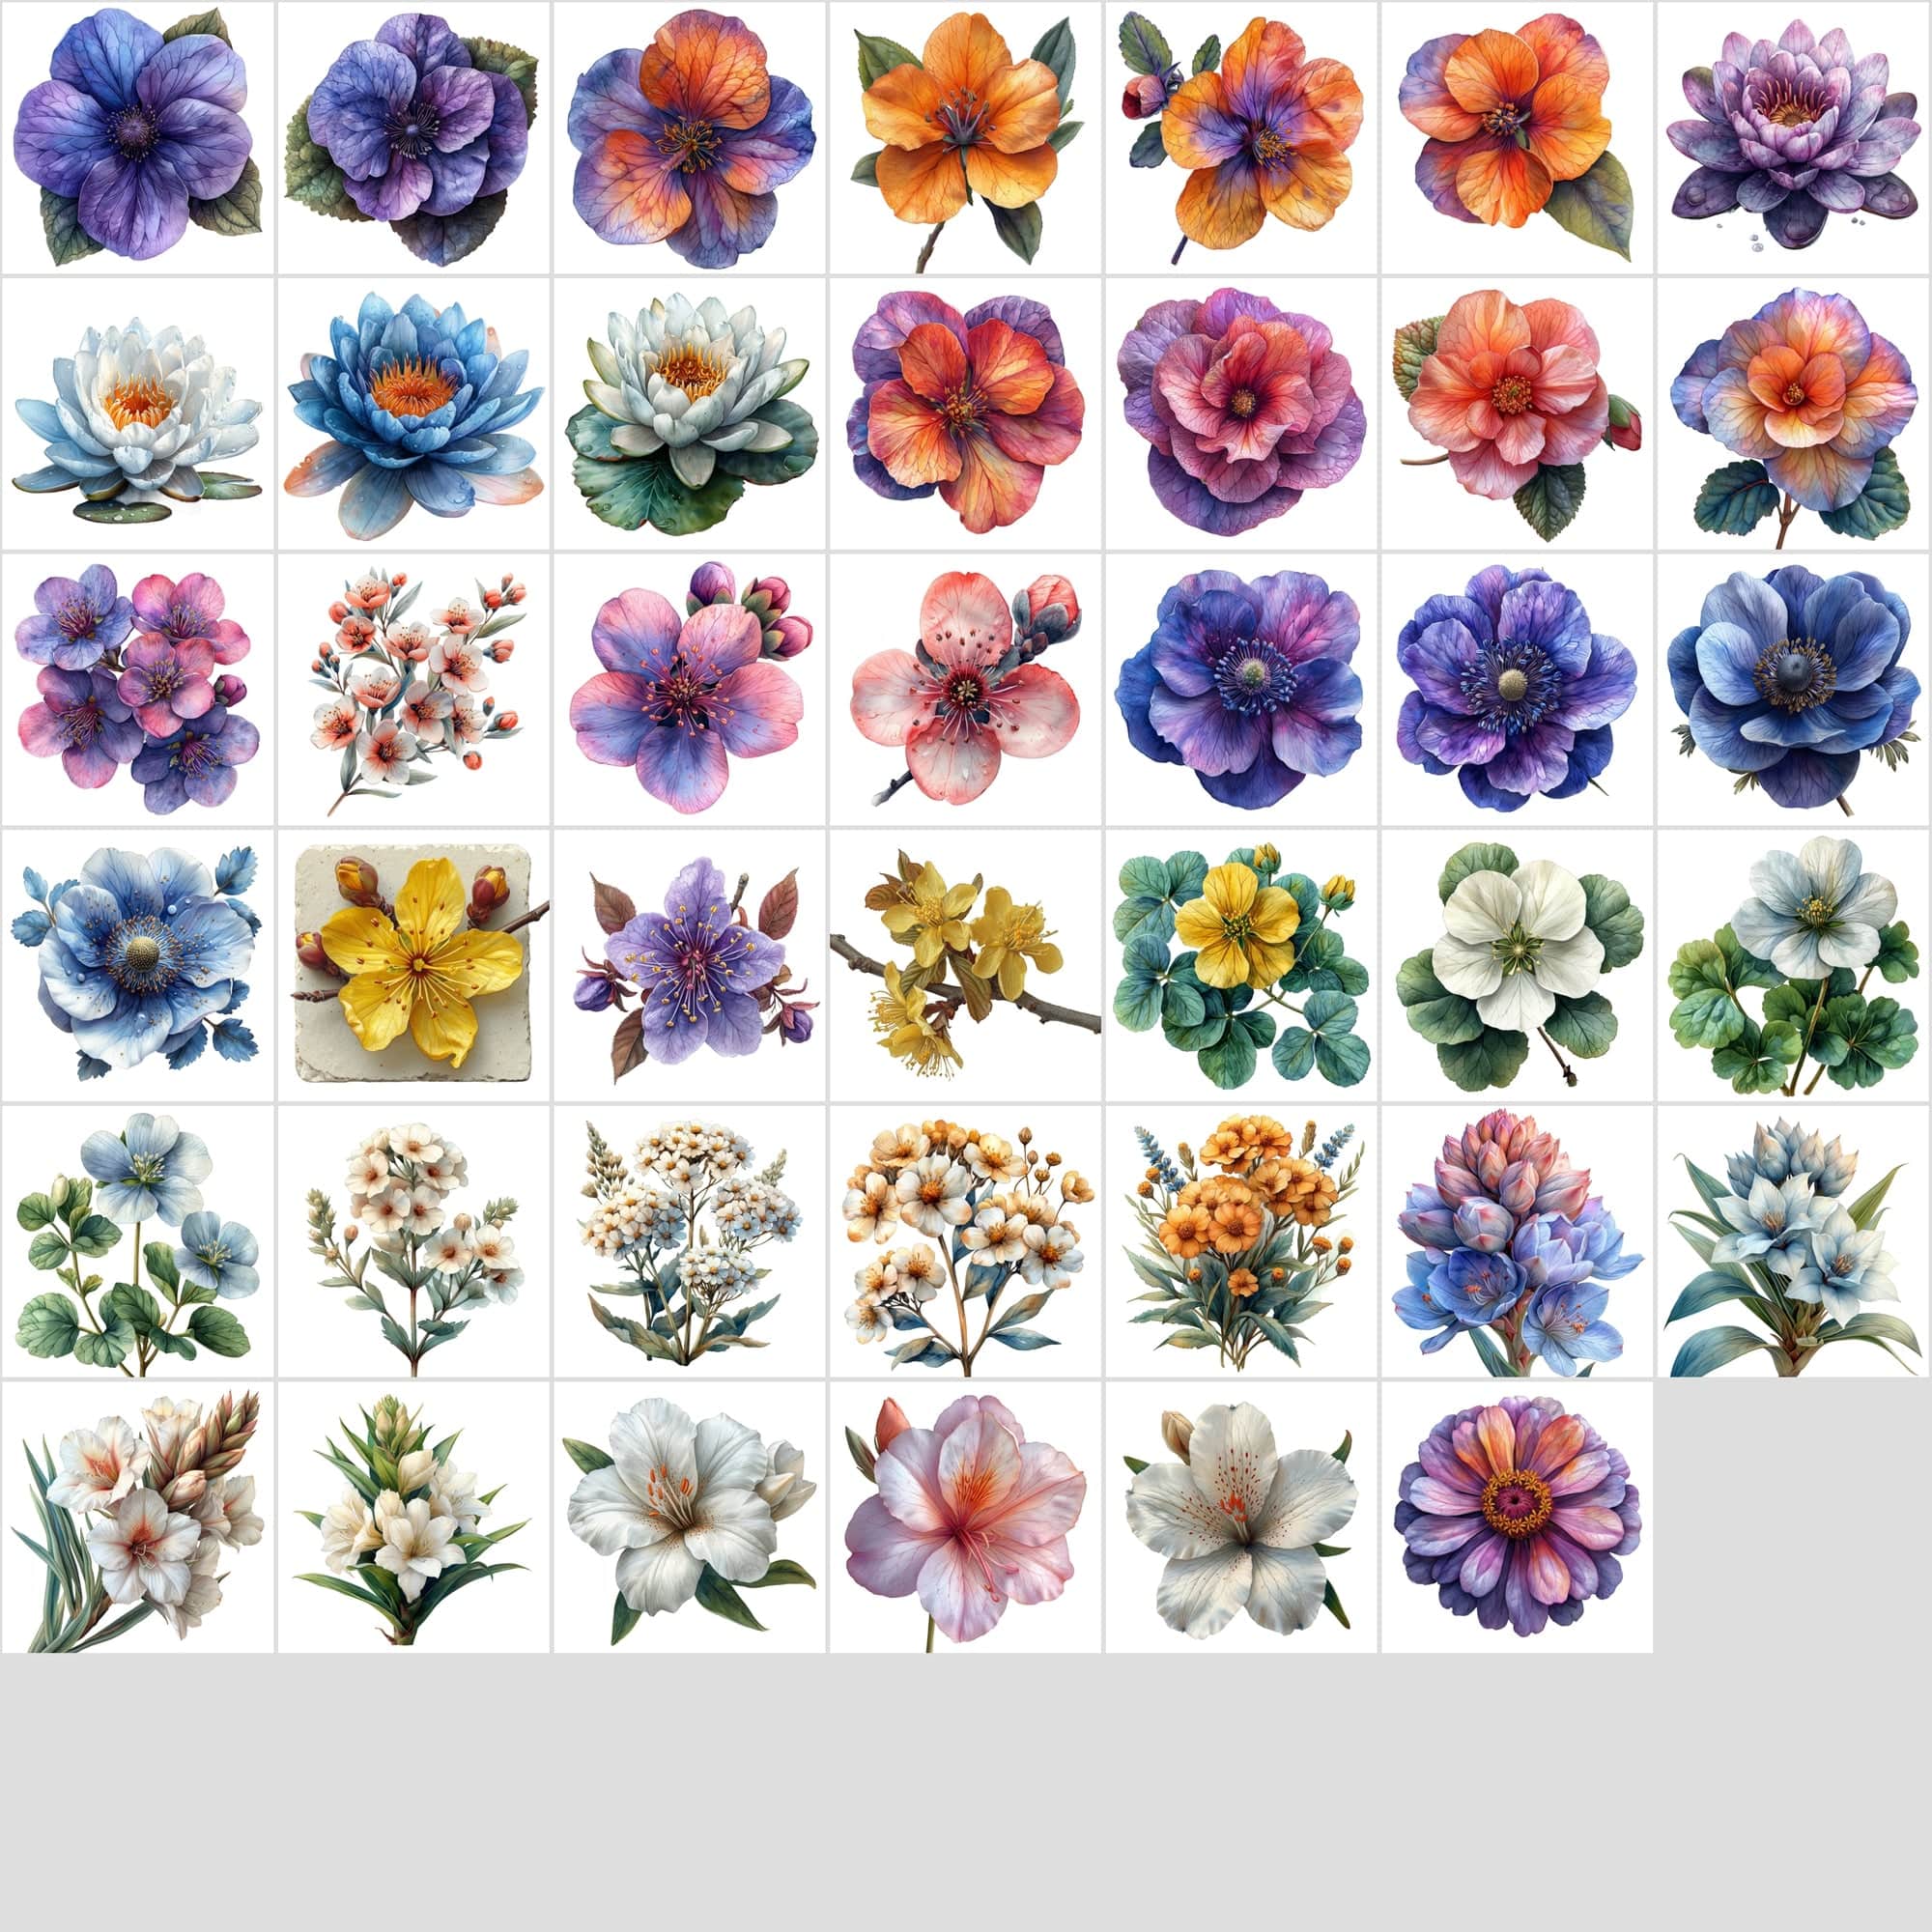 Watercolor Flower PNG Images Bundle - 570 Top View Floral Designs with Transparent & White Background Digital Download Sumobundle